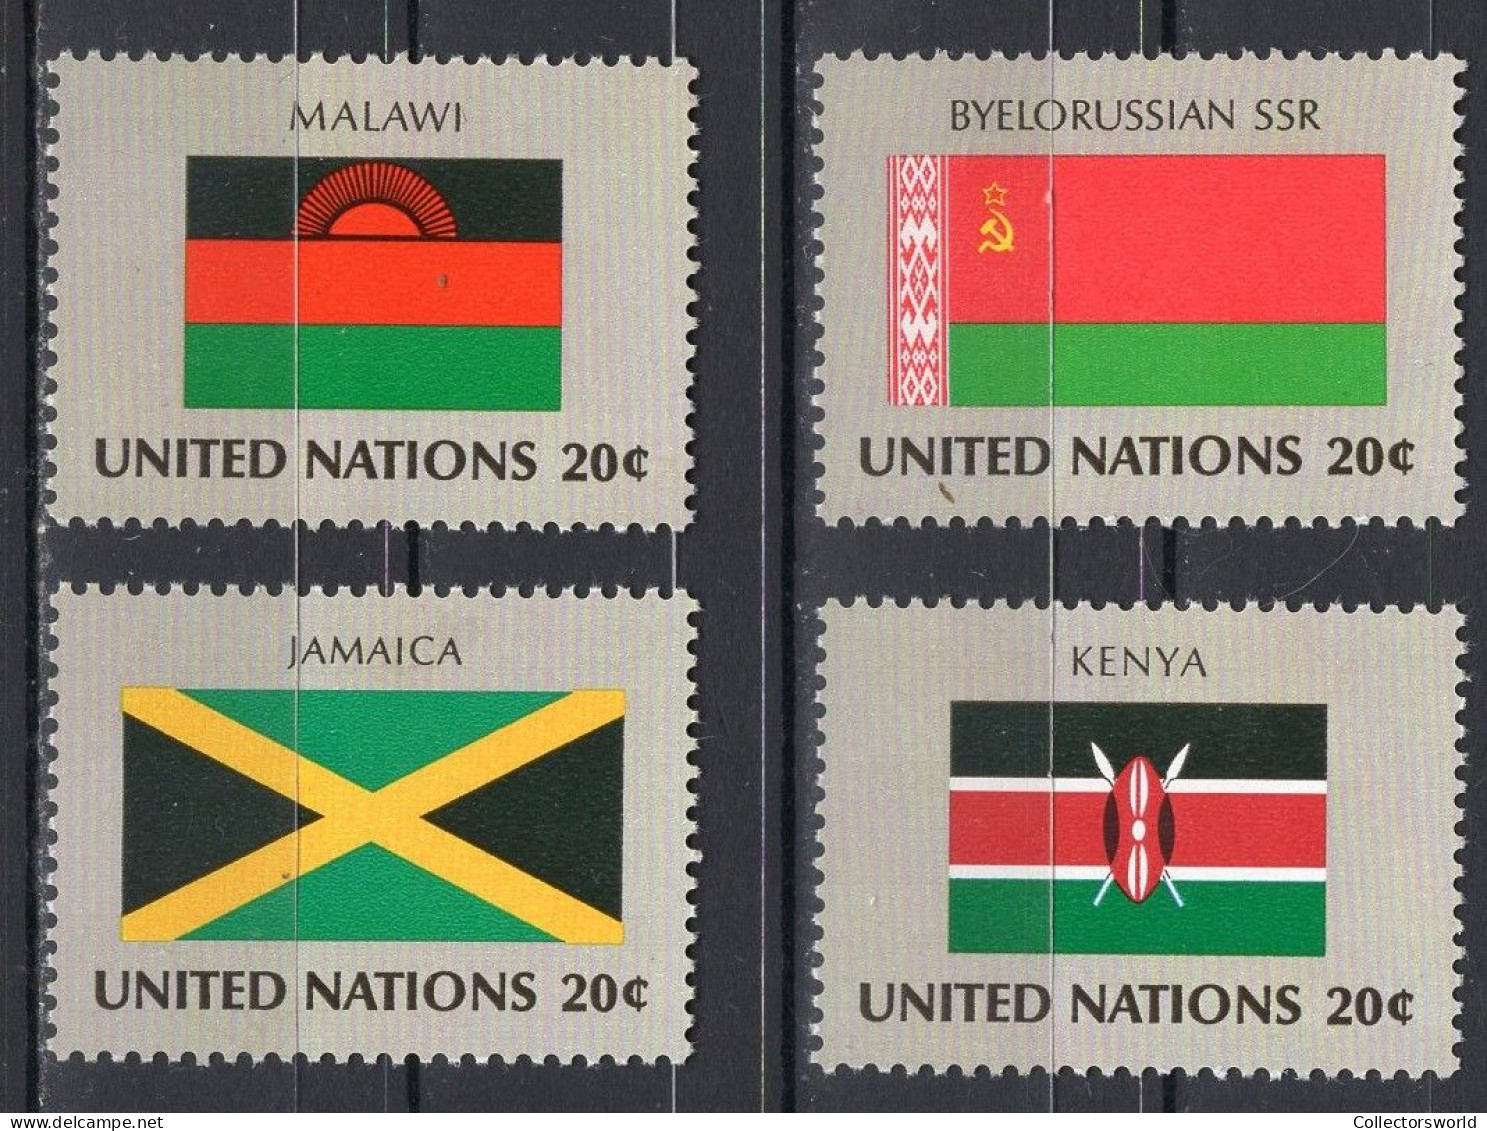 United Nations UN New York Serie 4v 1983 Flag Serie Malawi Jamaica Kenya Belarus MNH - Neufs